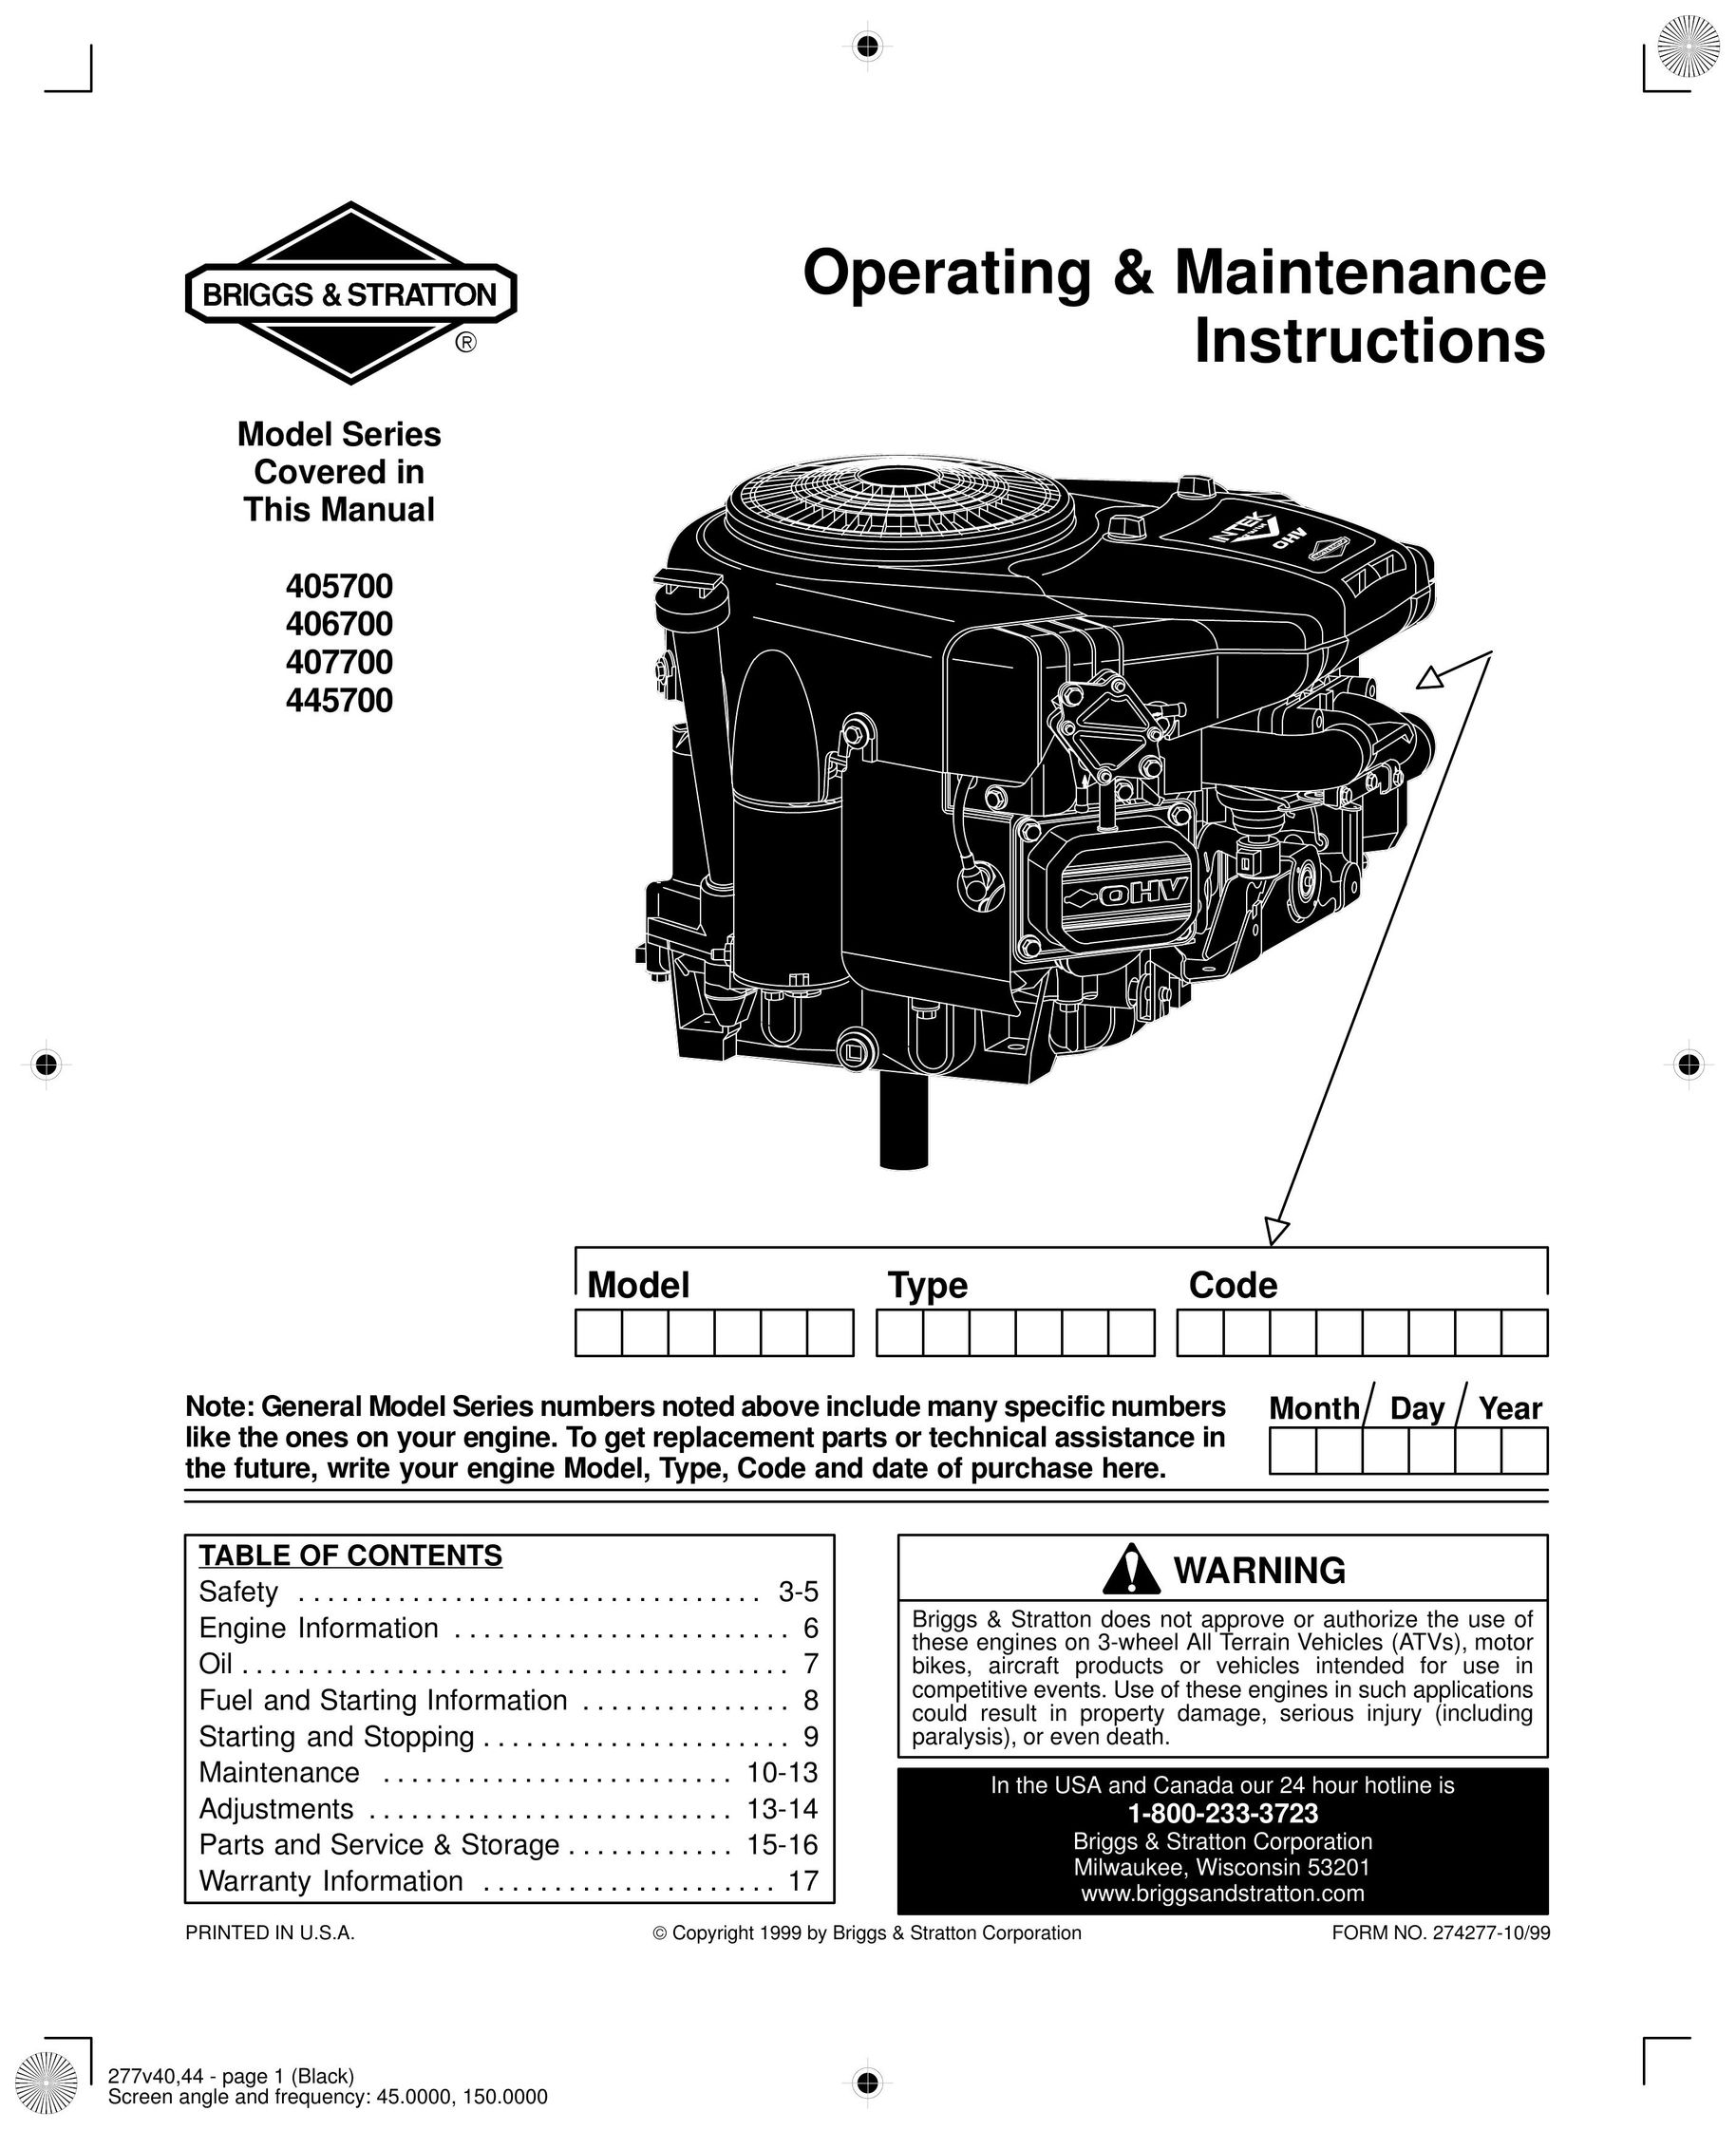 Briggs & Stratton 445700 Air Cleaner User Manual